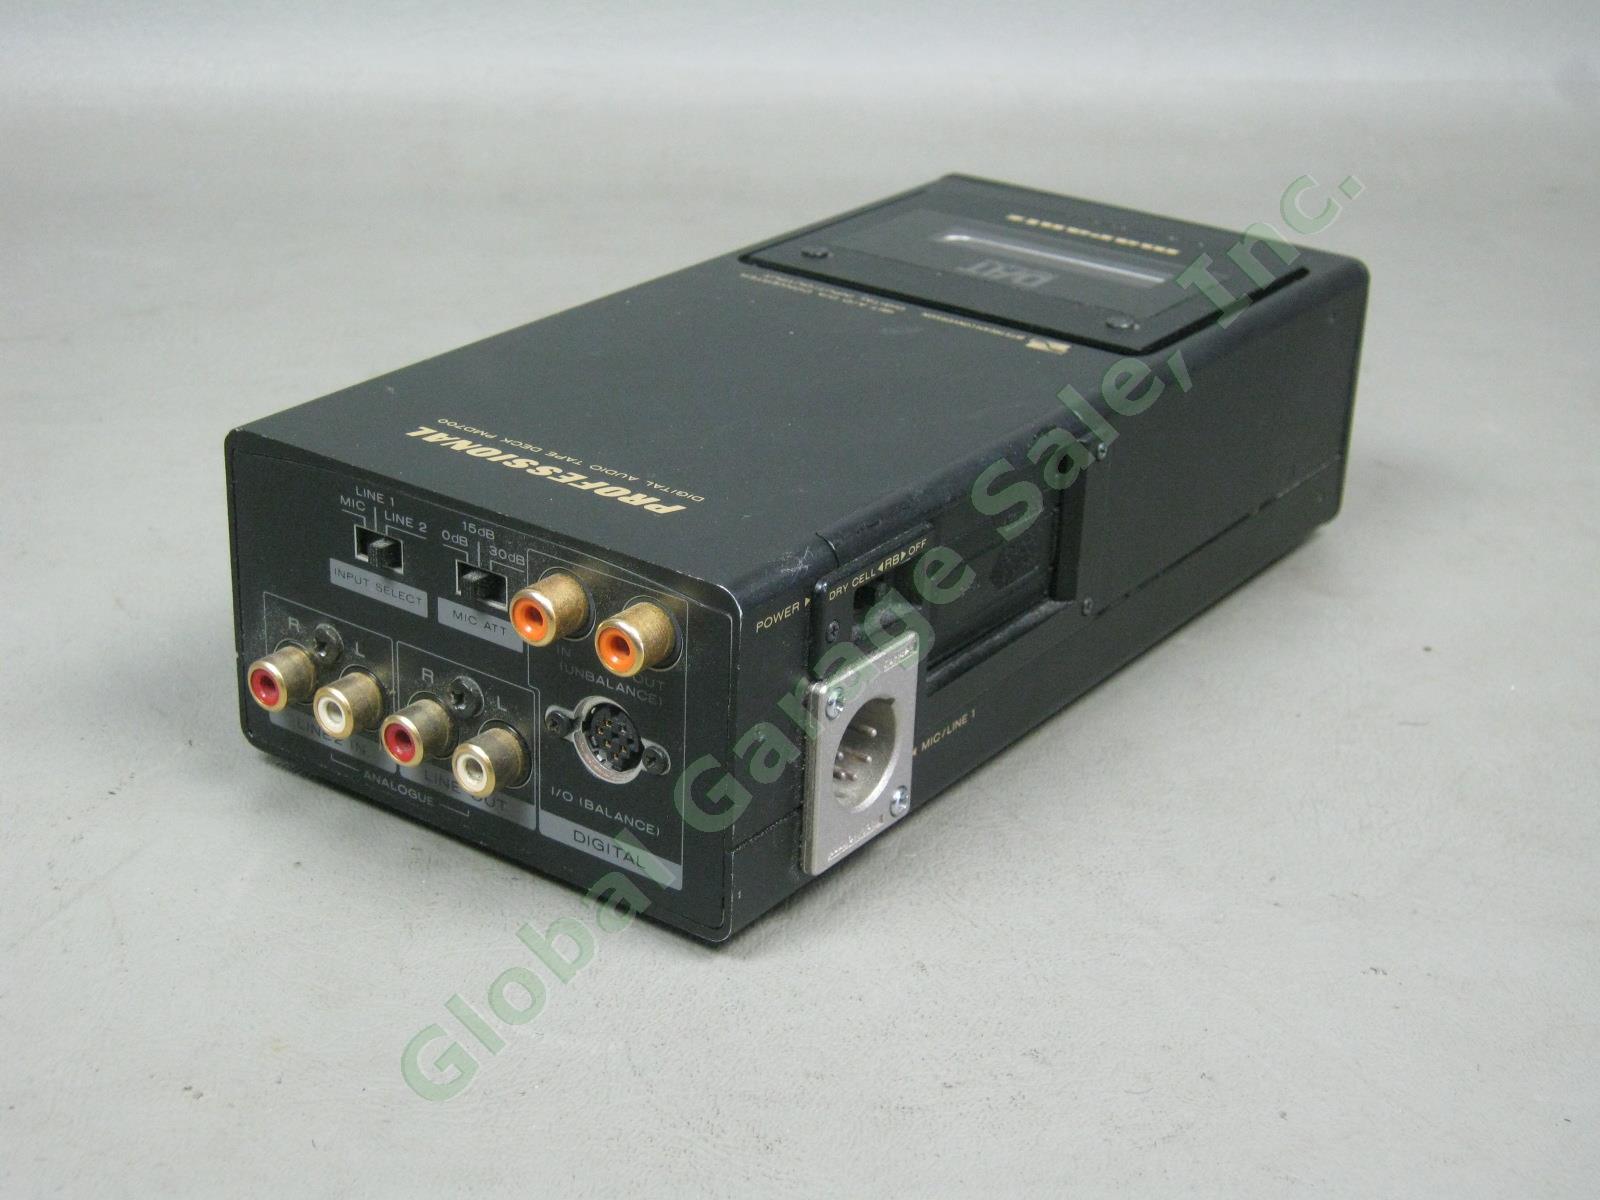 Marantz PMD700 Professional DAT Digital Audio Tape Deck Recorder +AC Adapter Lot 4